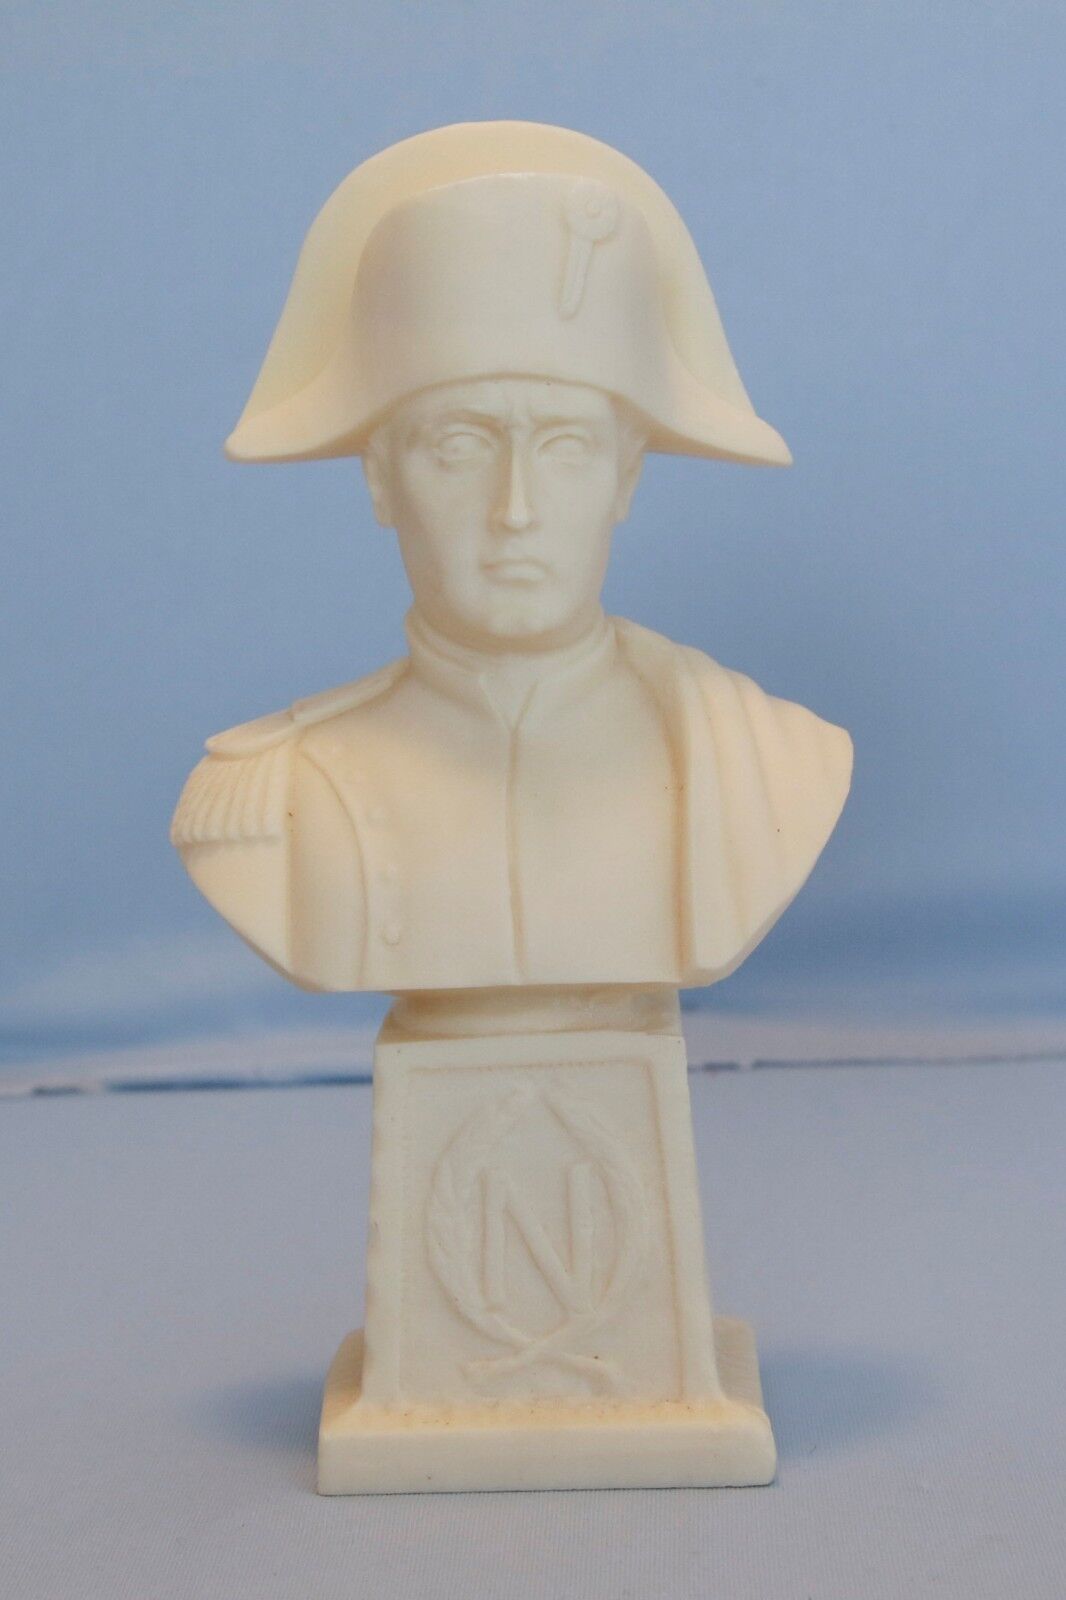 Bust of French Emperor Napoleon Bonaparte Waterloo Battle War